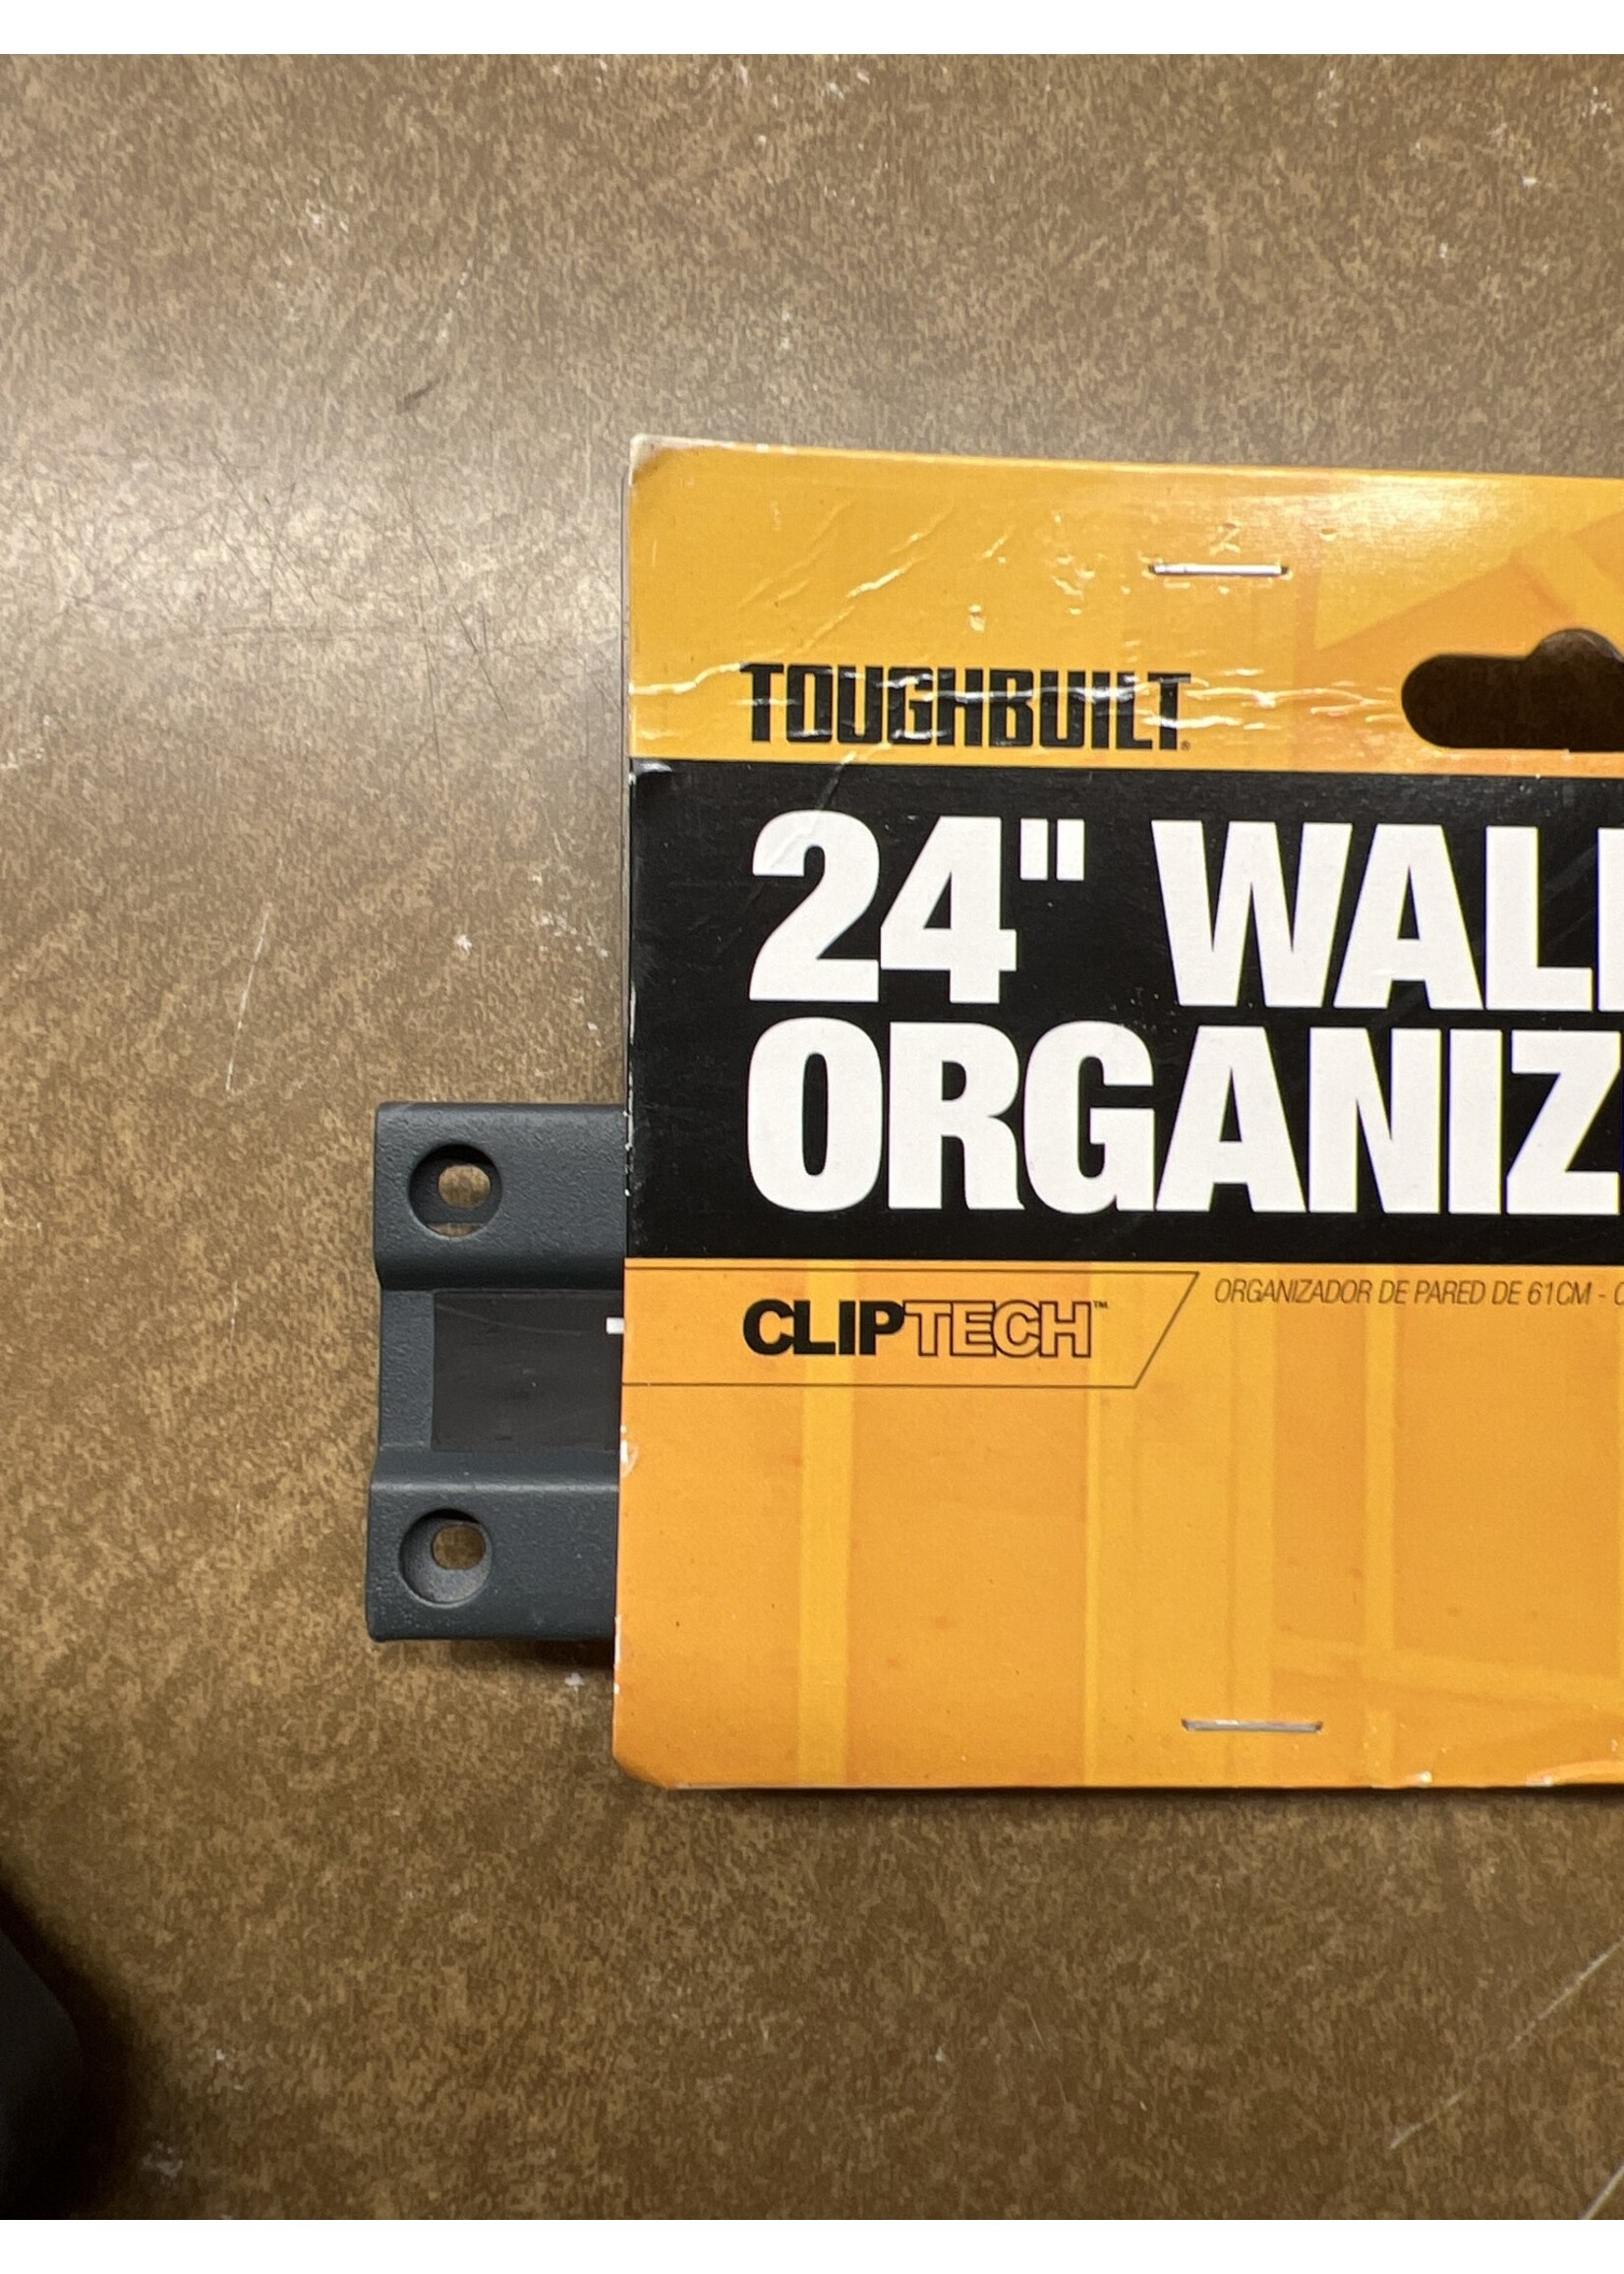 Missing one guard- Toughbuilt 24” Wall Organizer -clip tech